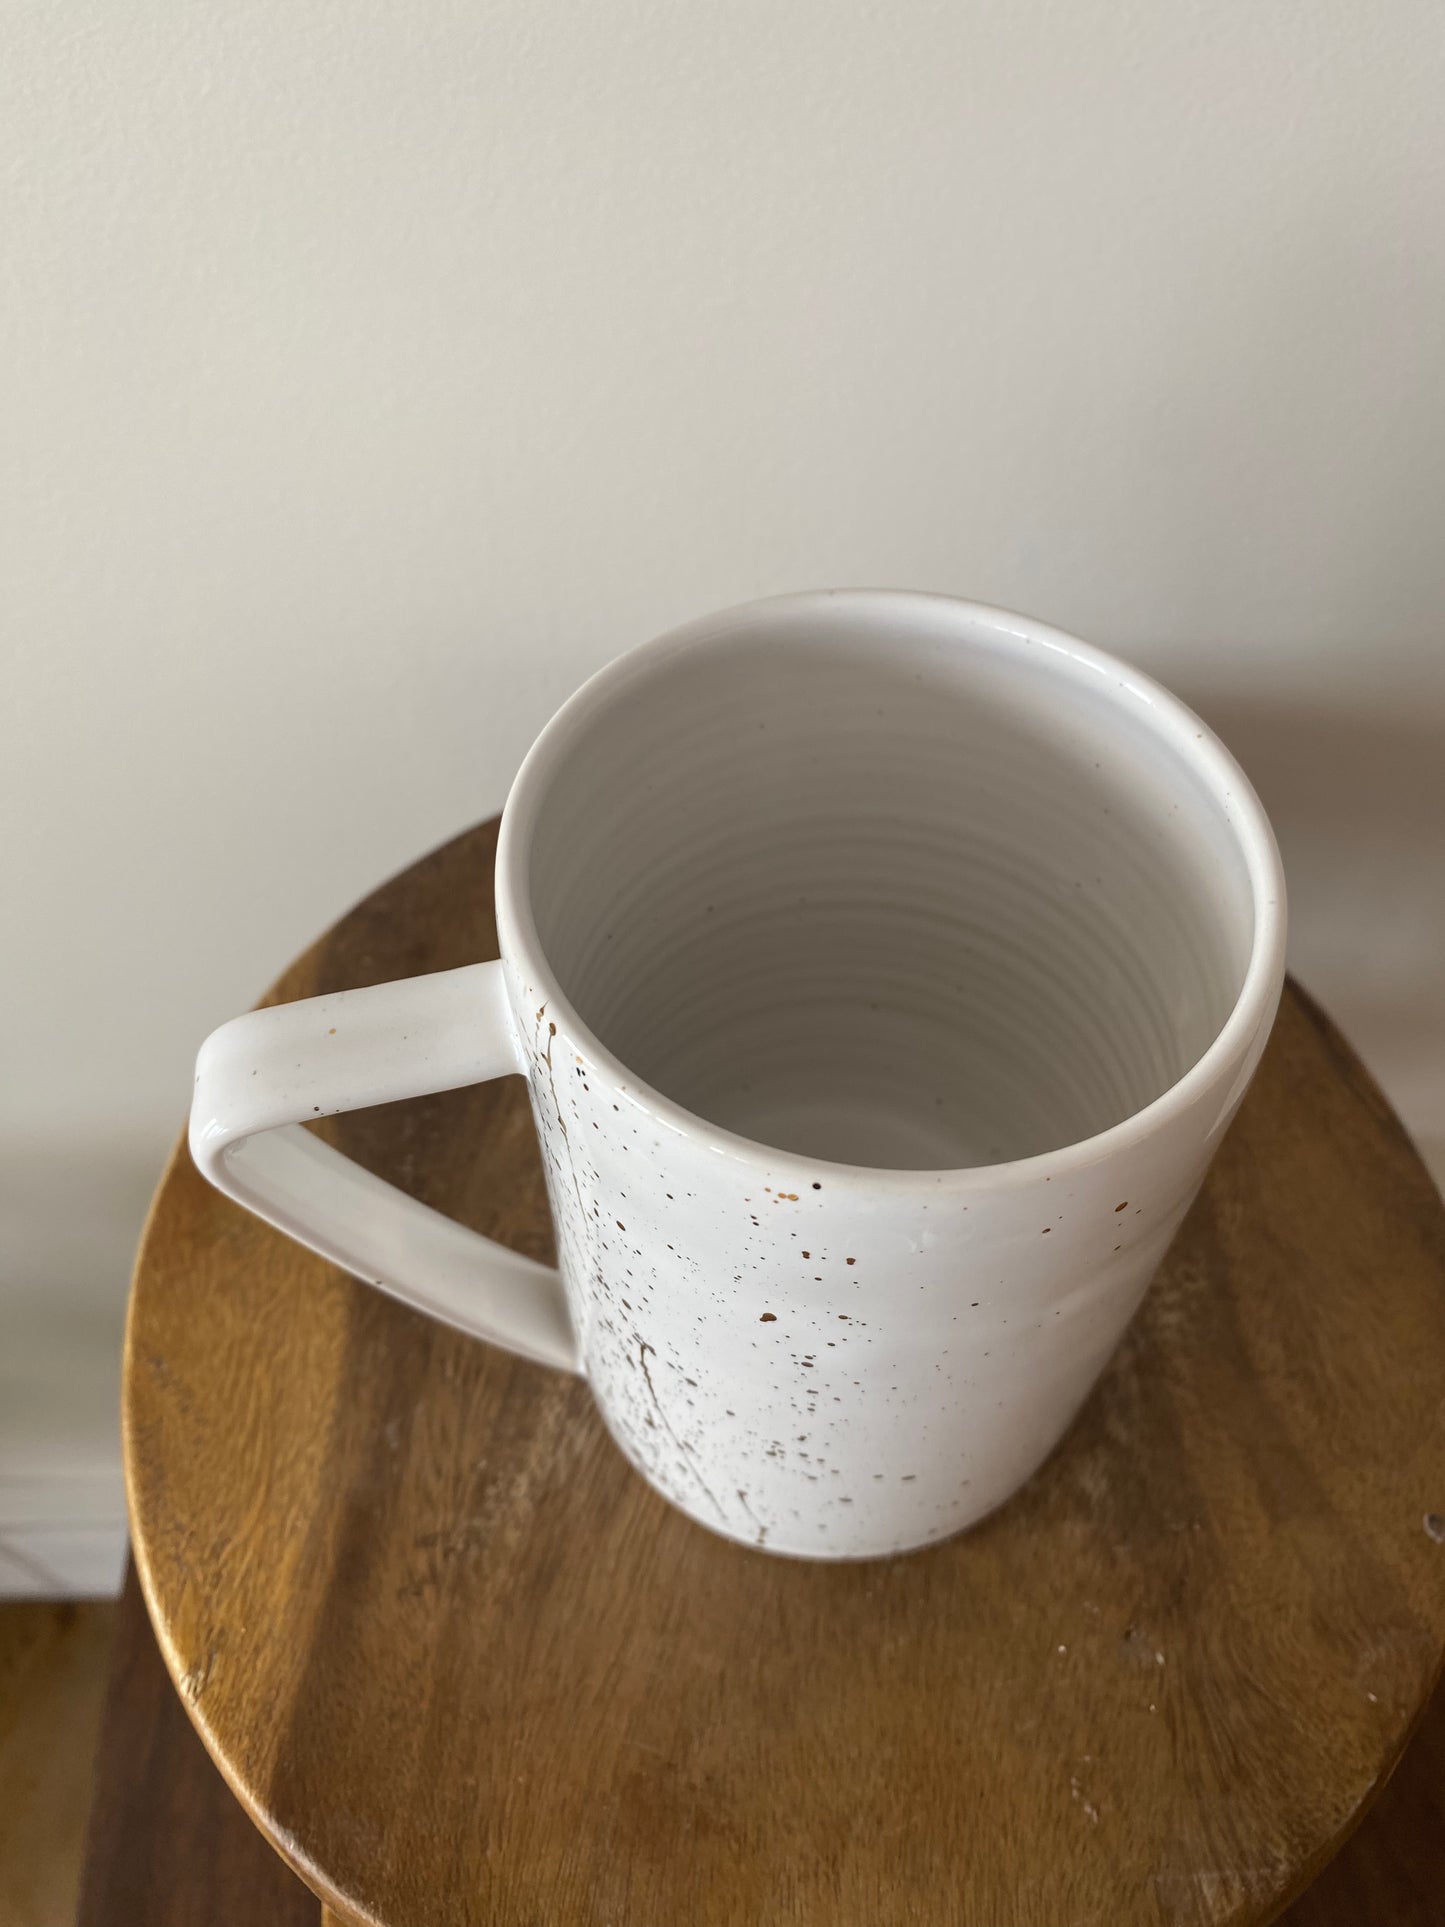 Pepo Ceramics Extra Tall Gold Splatter Mug- gloss white